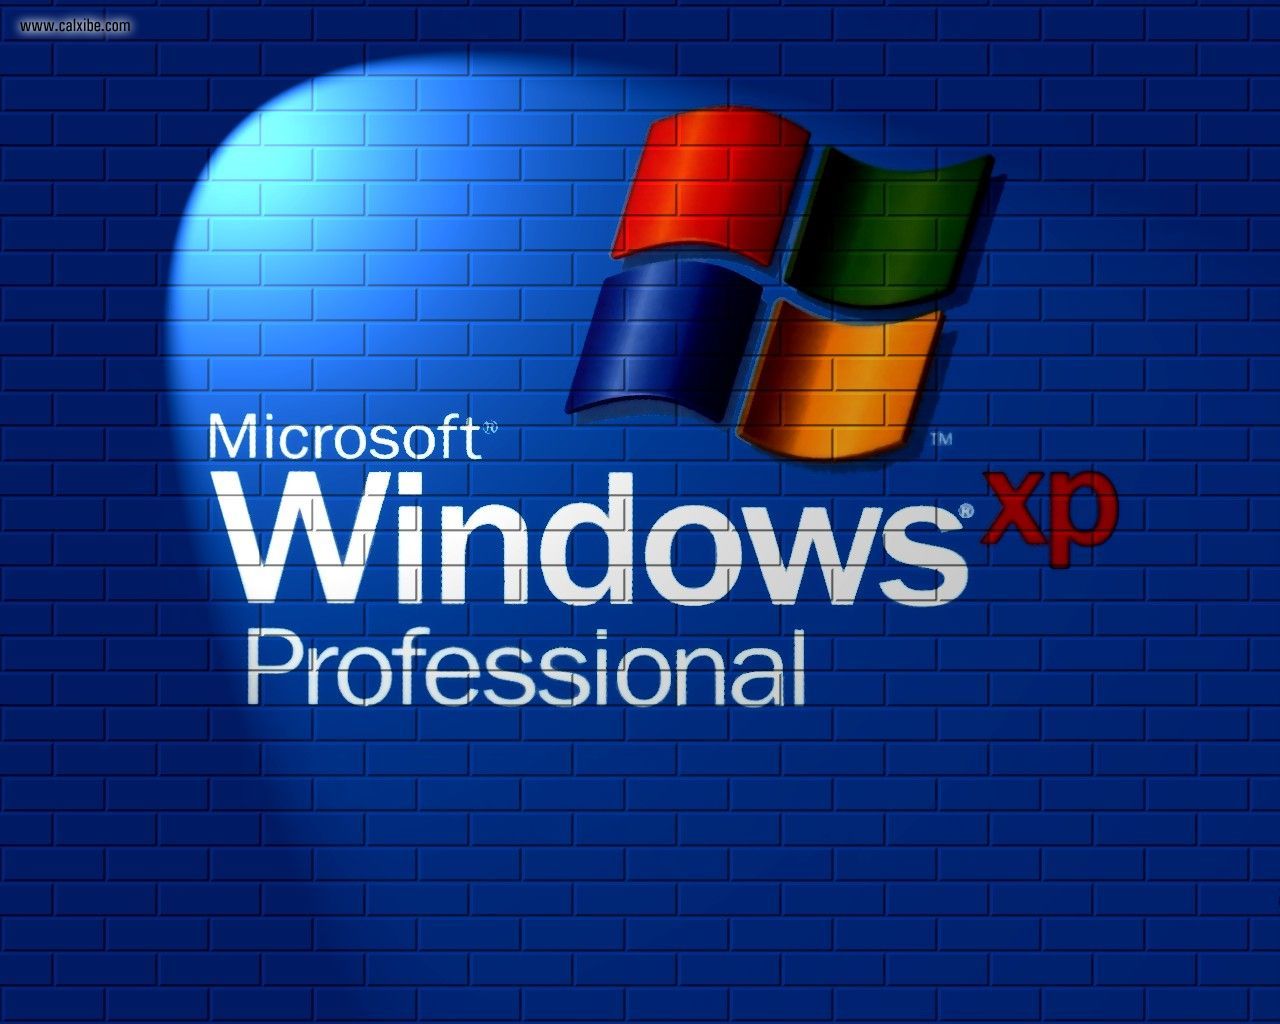 Windows Xp Professional 32bit (CZ)